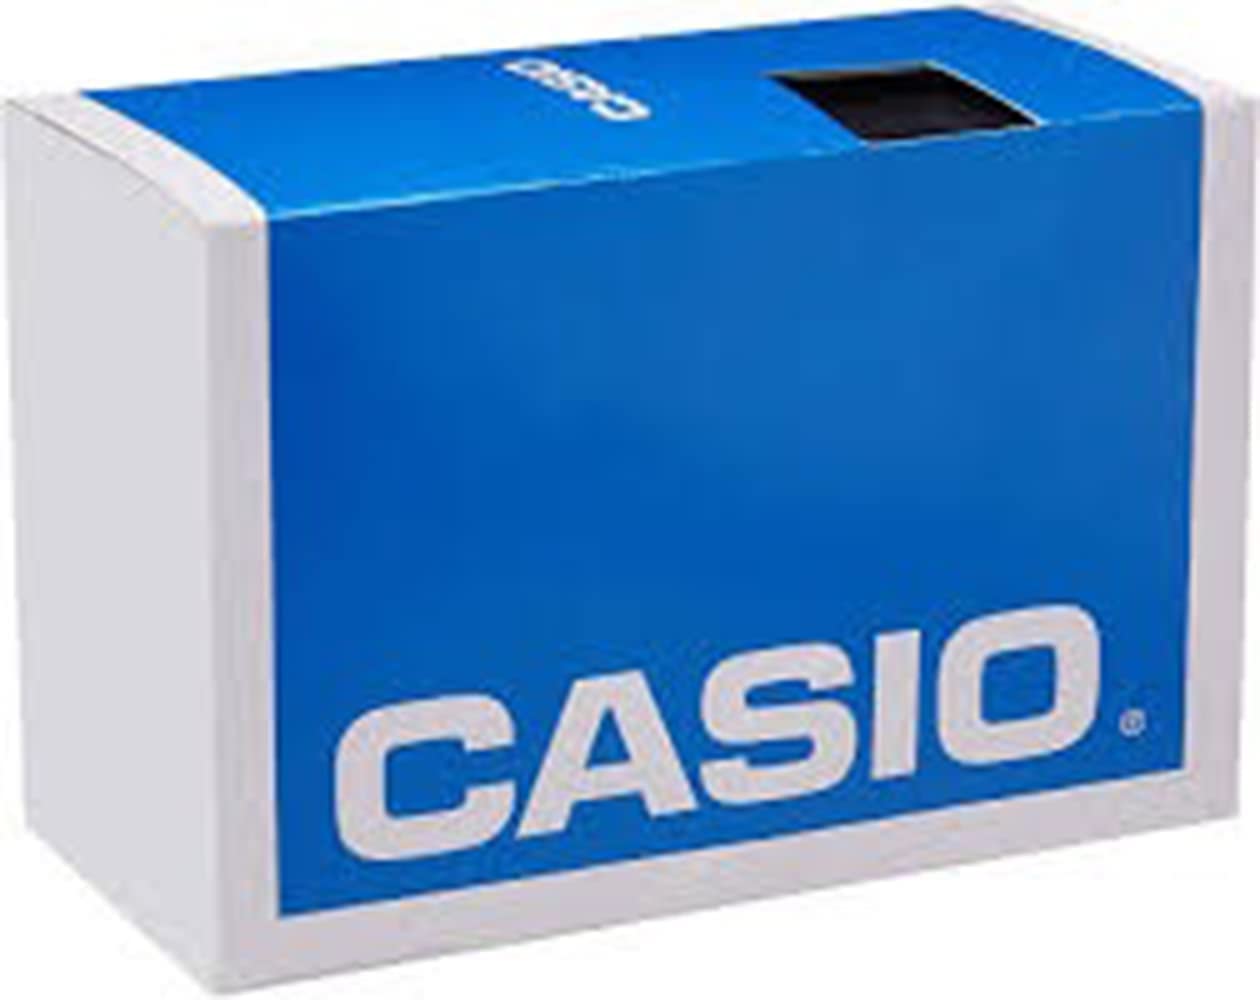 Casio Illuminator 10-Year Battery Extra Long Strap 100 M Water Resistance 5-Alarm w/Countdown Timer Men's Digital Watch, Green, AE-1500WHX-3AVCF